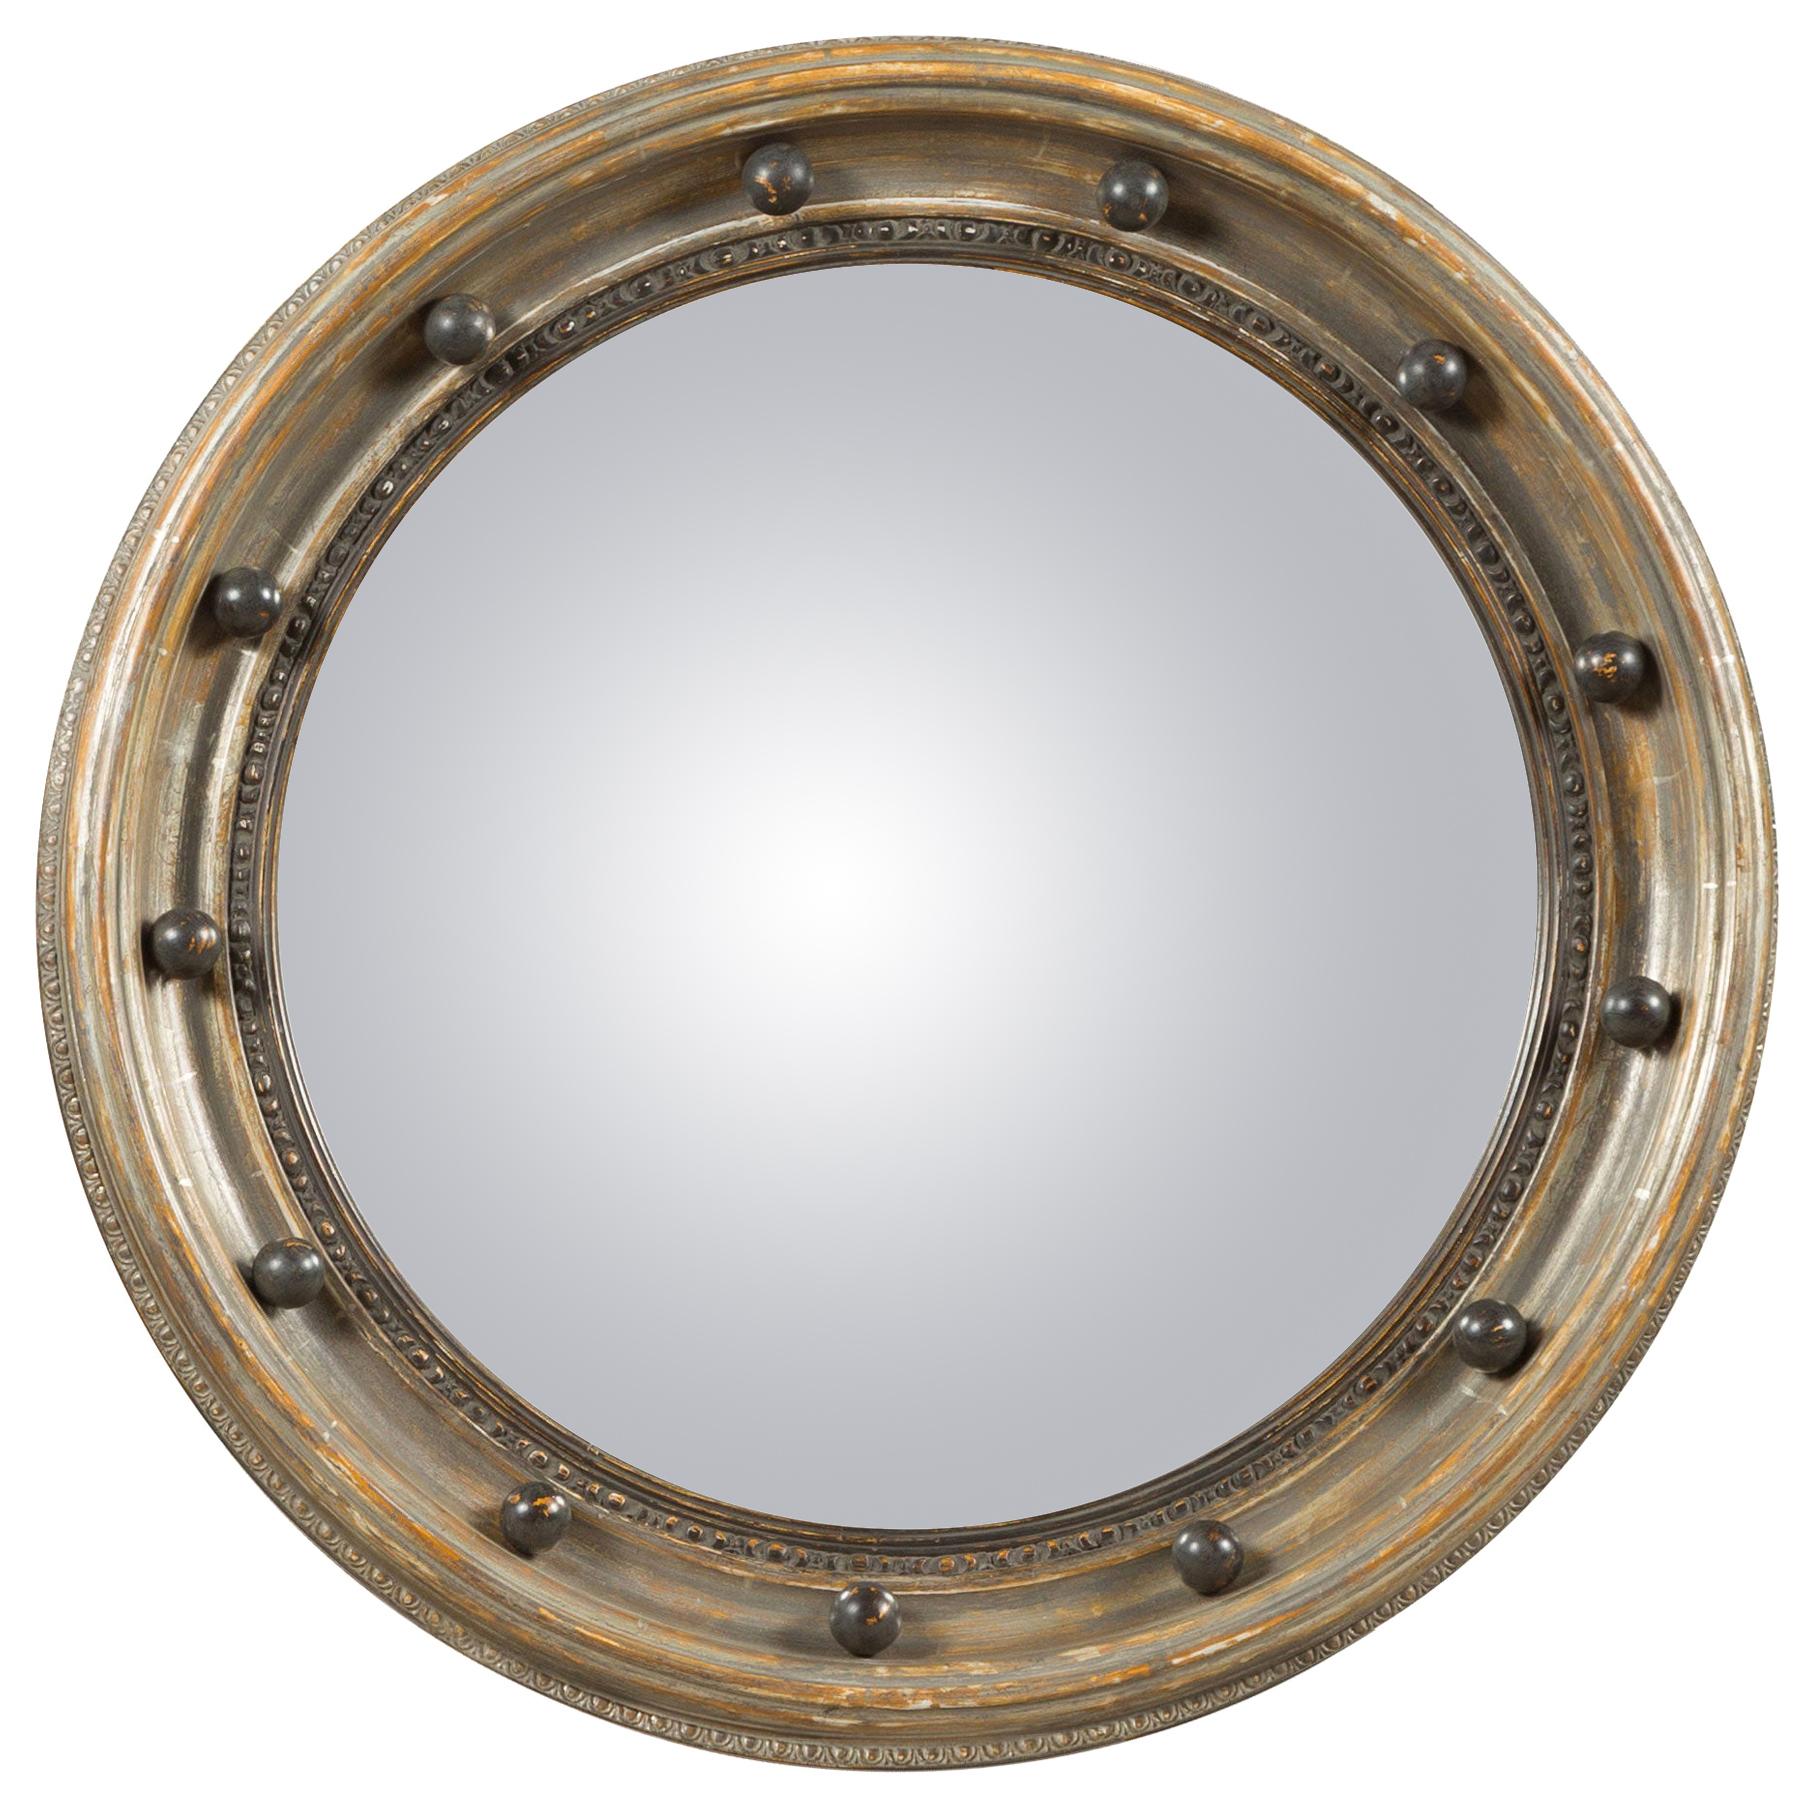 English Midcentury Silver Leaf Carved Convex Bullseye Mirror with Dark Spheres